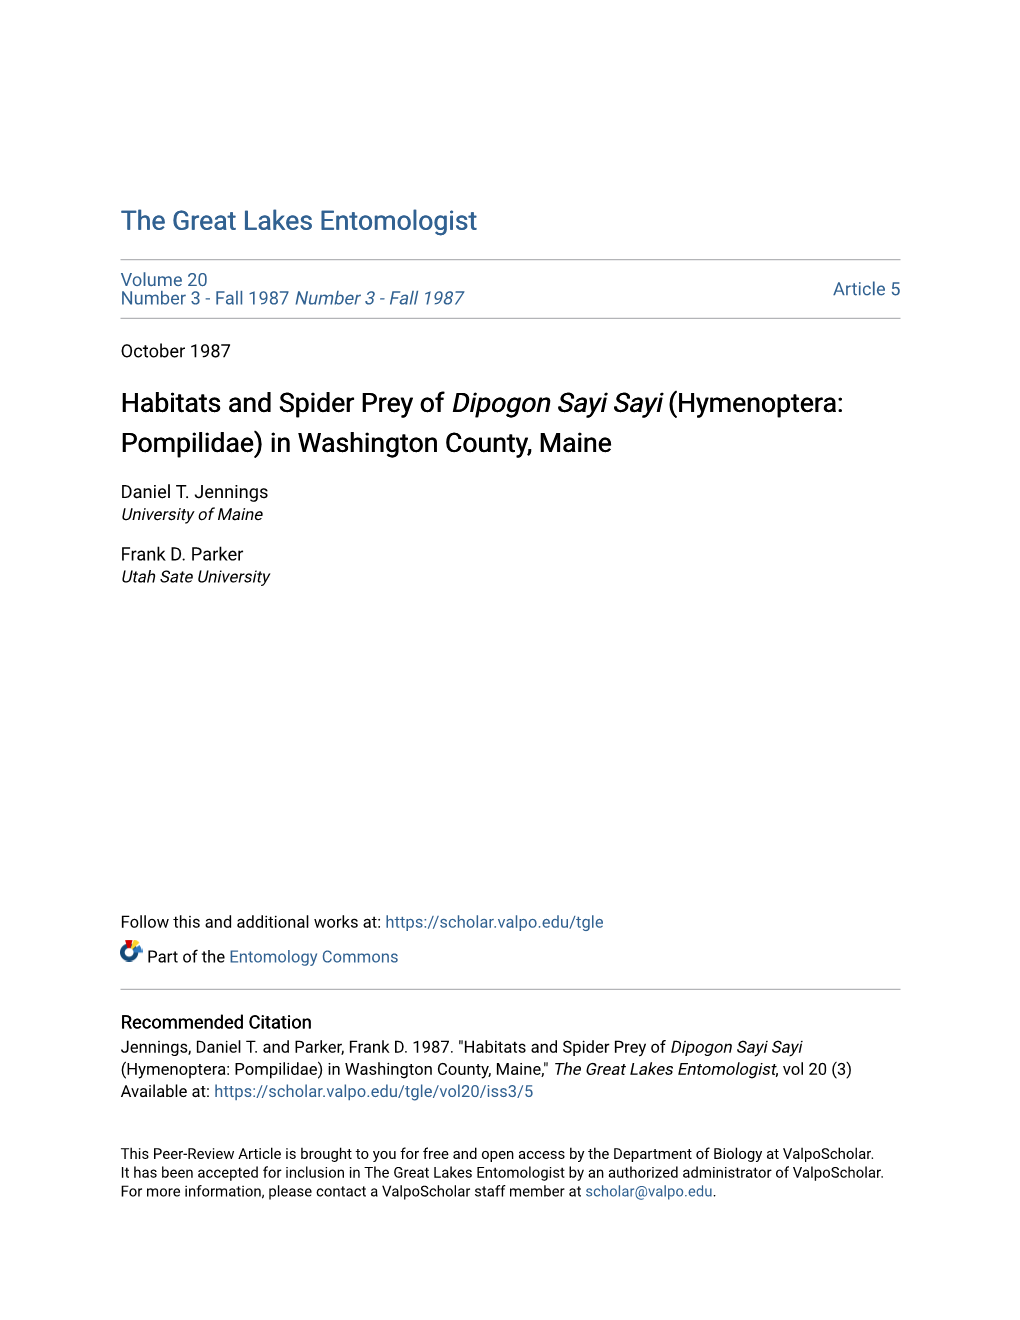 Habitats and Spider Prey of Dipogon Sayi Sayi (Hymenoptera: Pompilidae) in Washington County, Maine